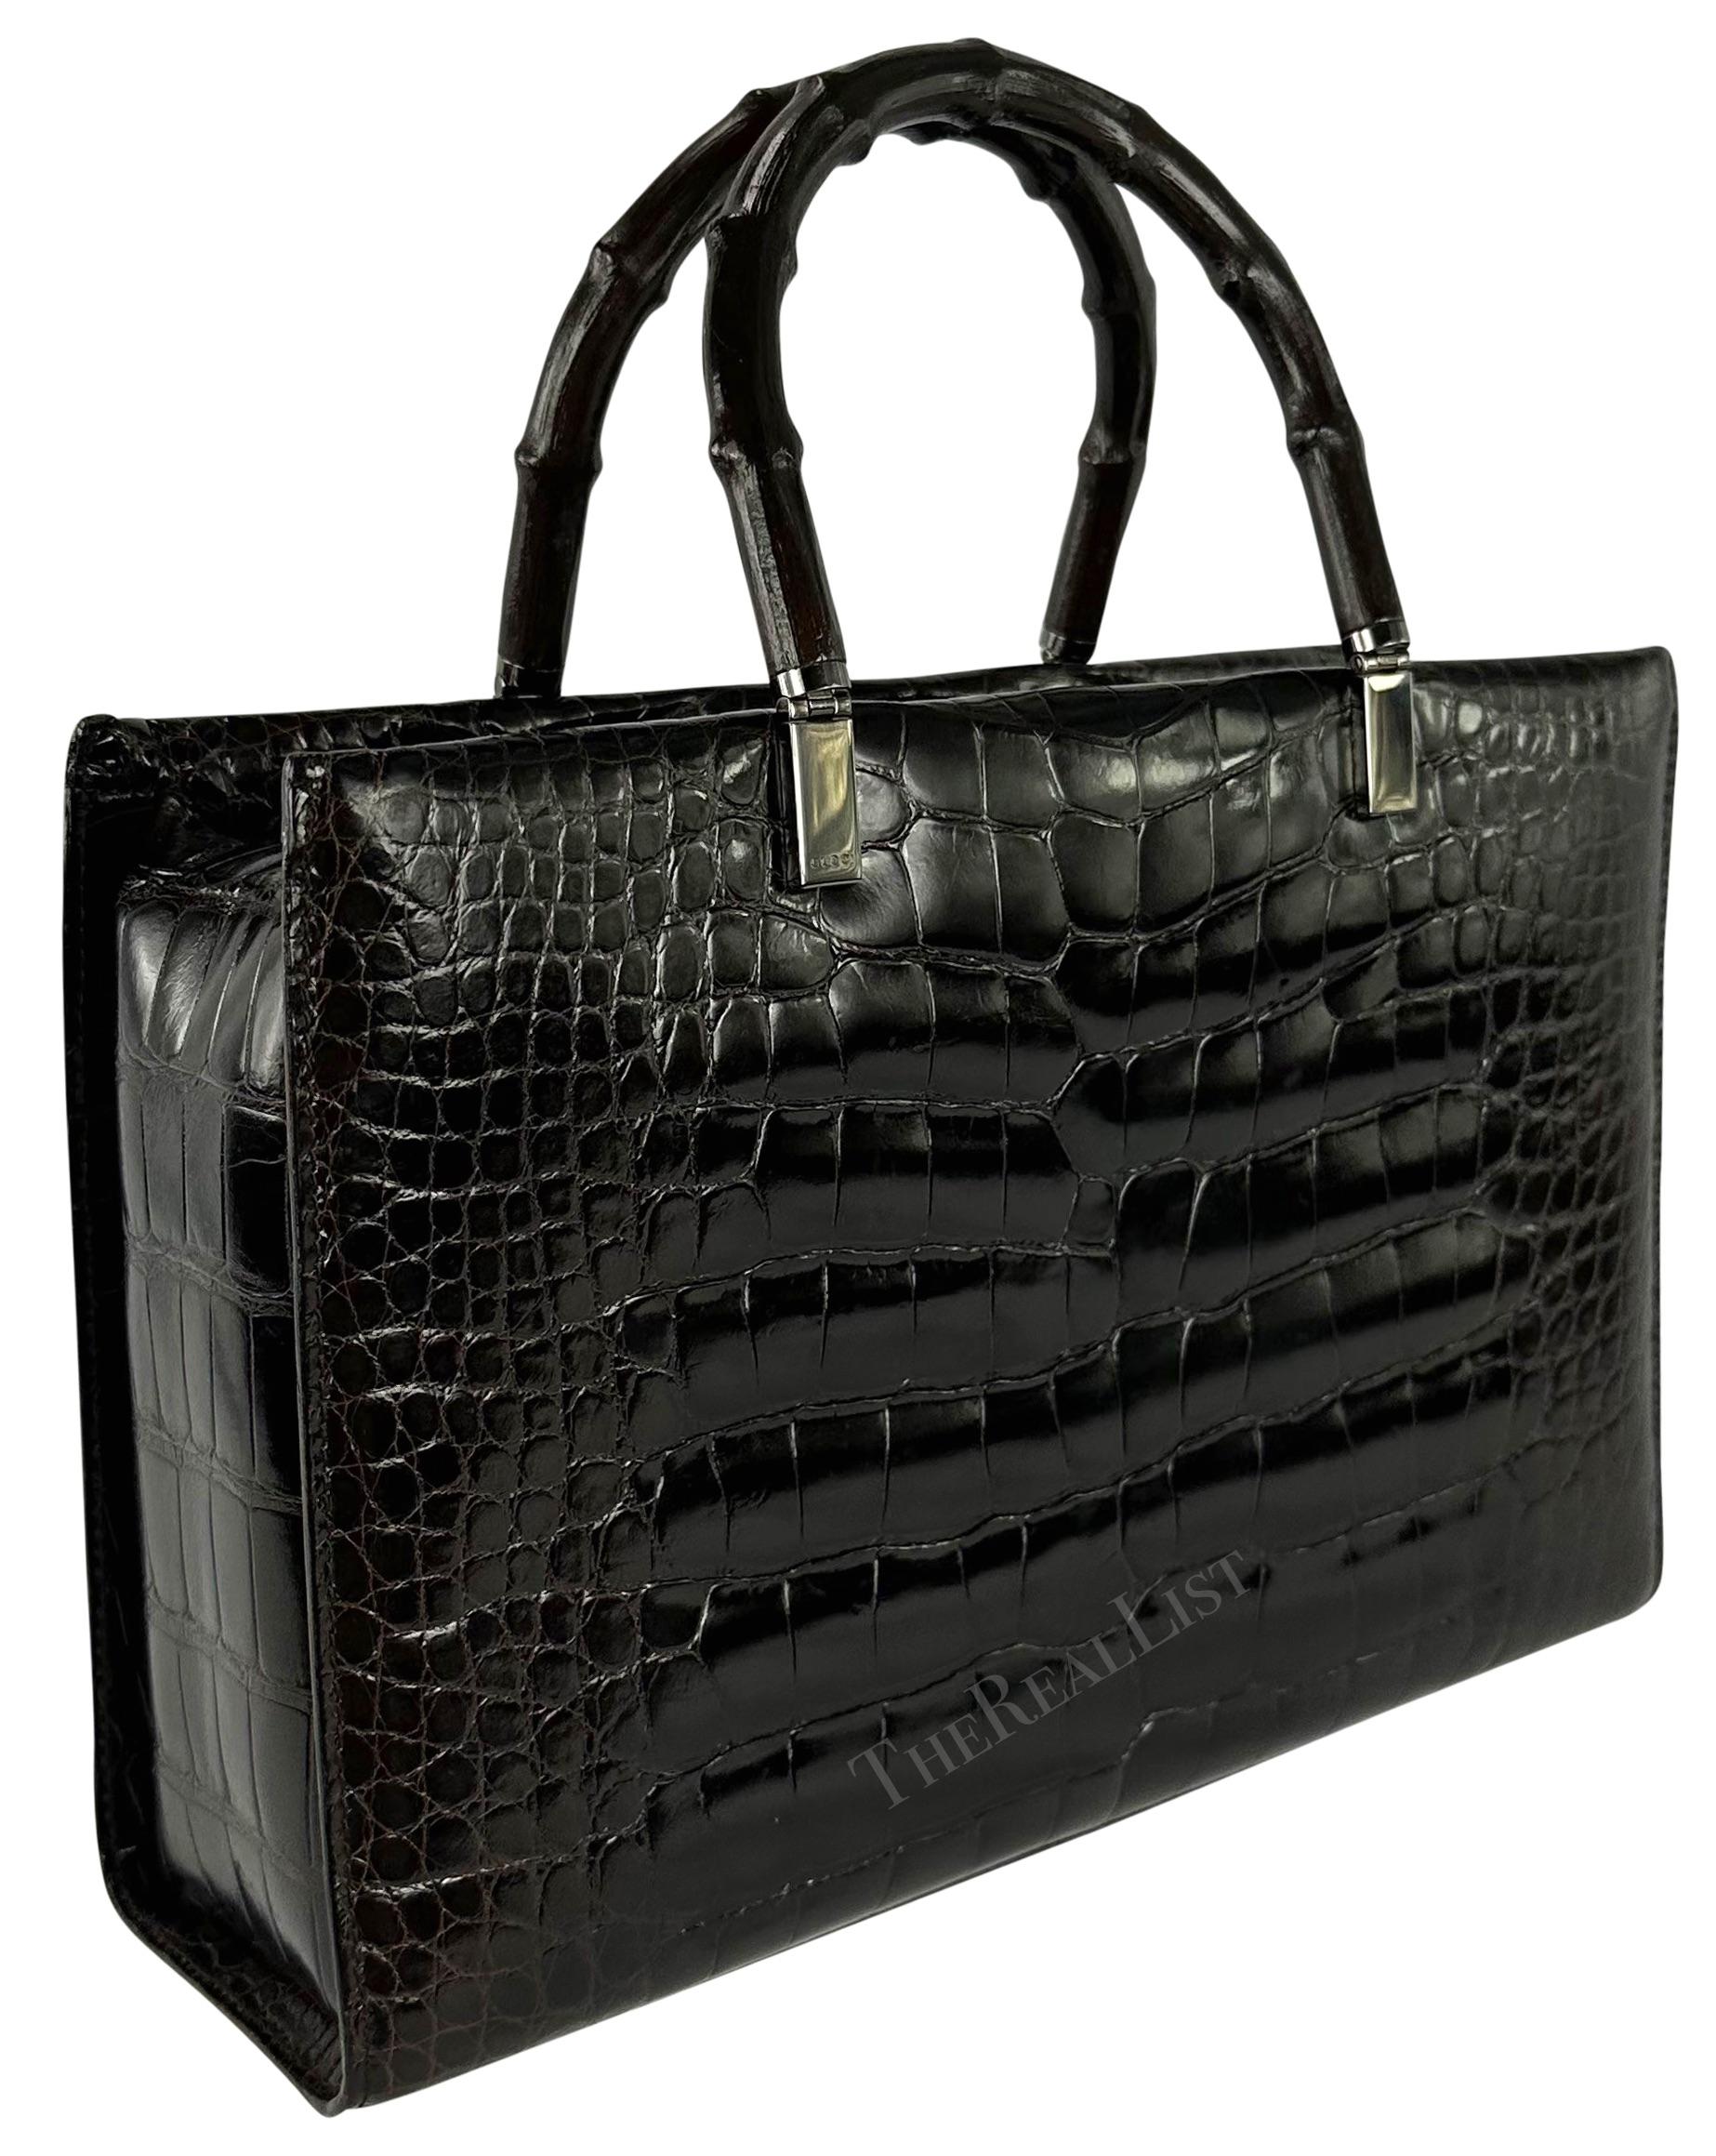 F/W 1998 Gucci by Tom Ford Ad Campaign Black Crocodile Bamboo Tote Bag  For Sale 5